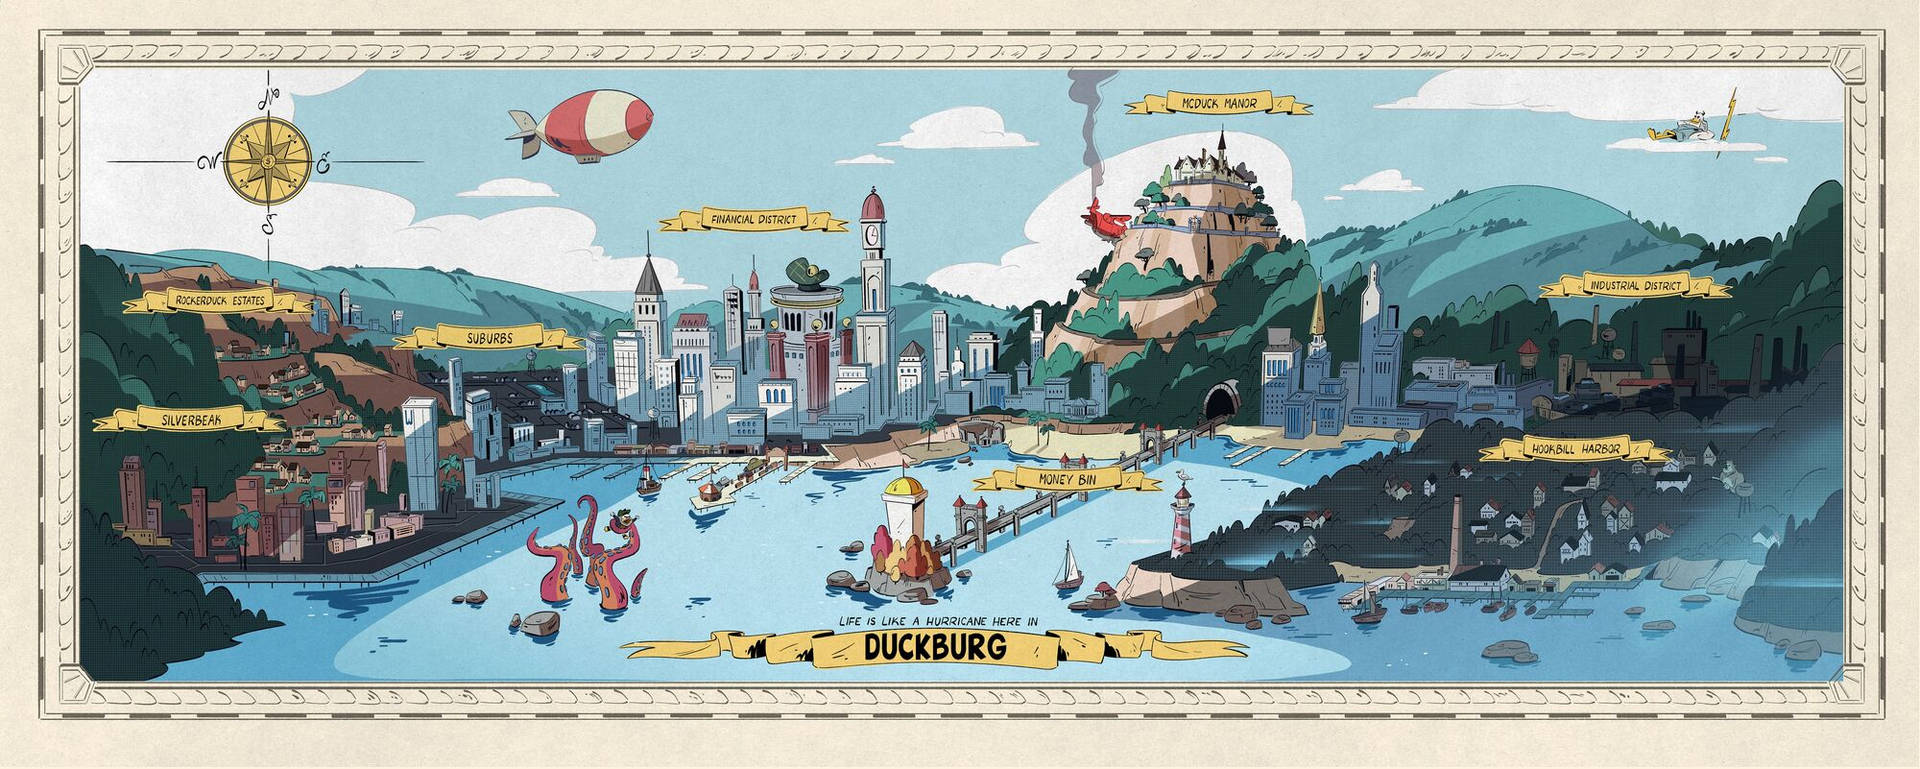 Ducktales Town Background